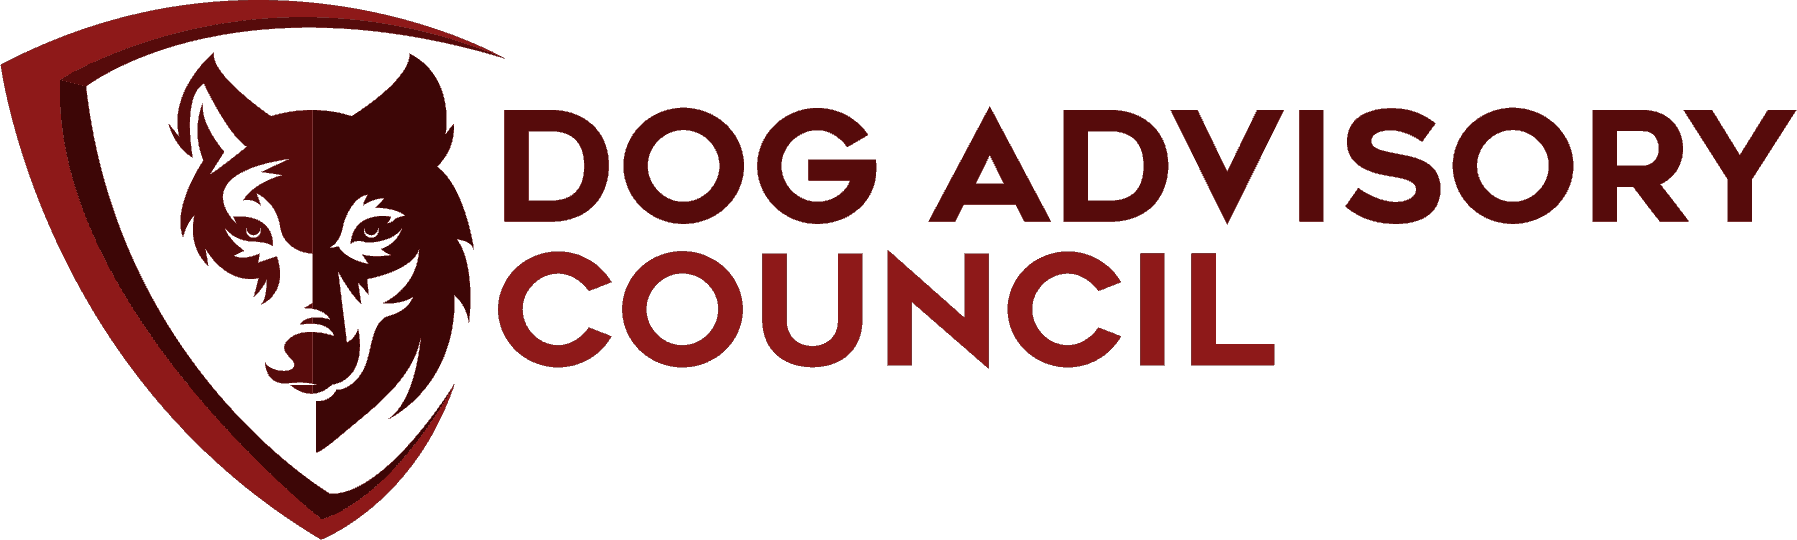 Dog Advisory Council